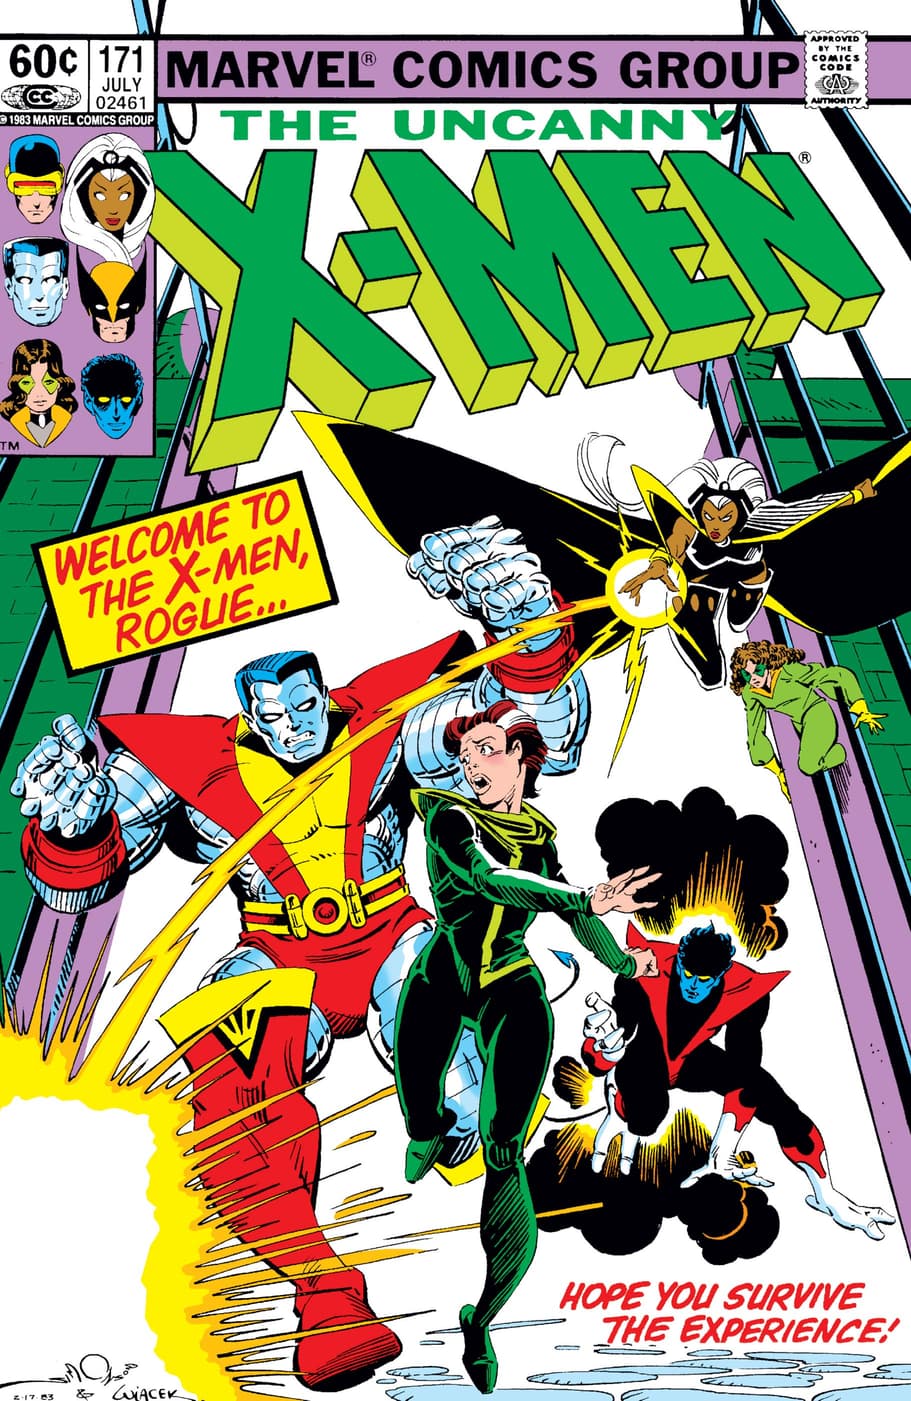 UNCANNY X-MEN (1963) #171 cover by Walter Simonson